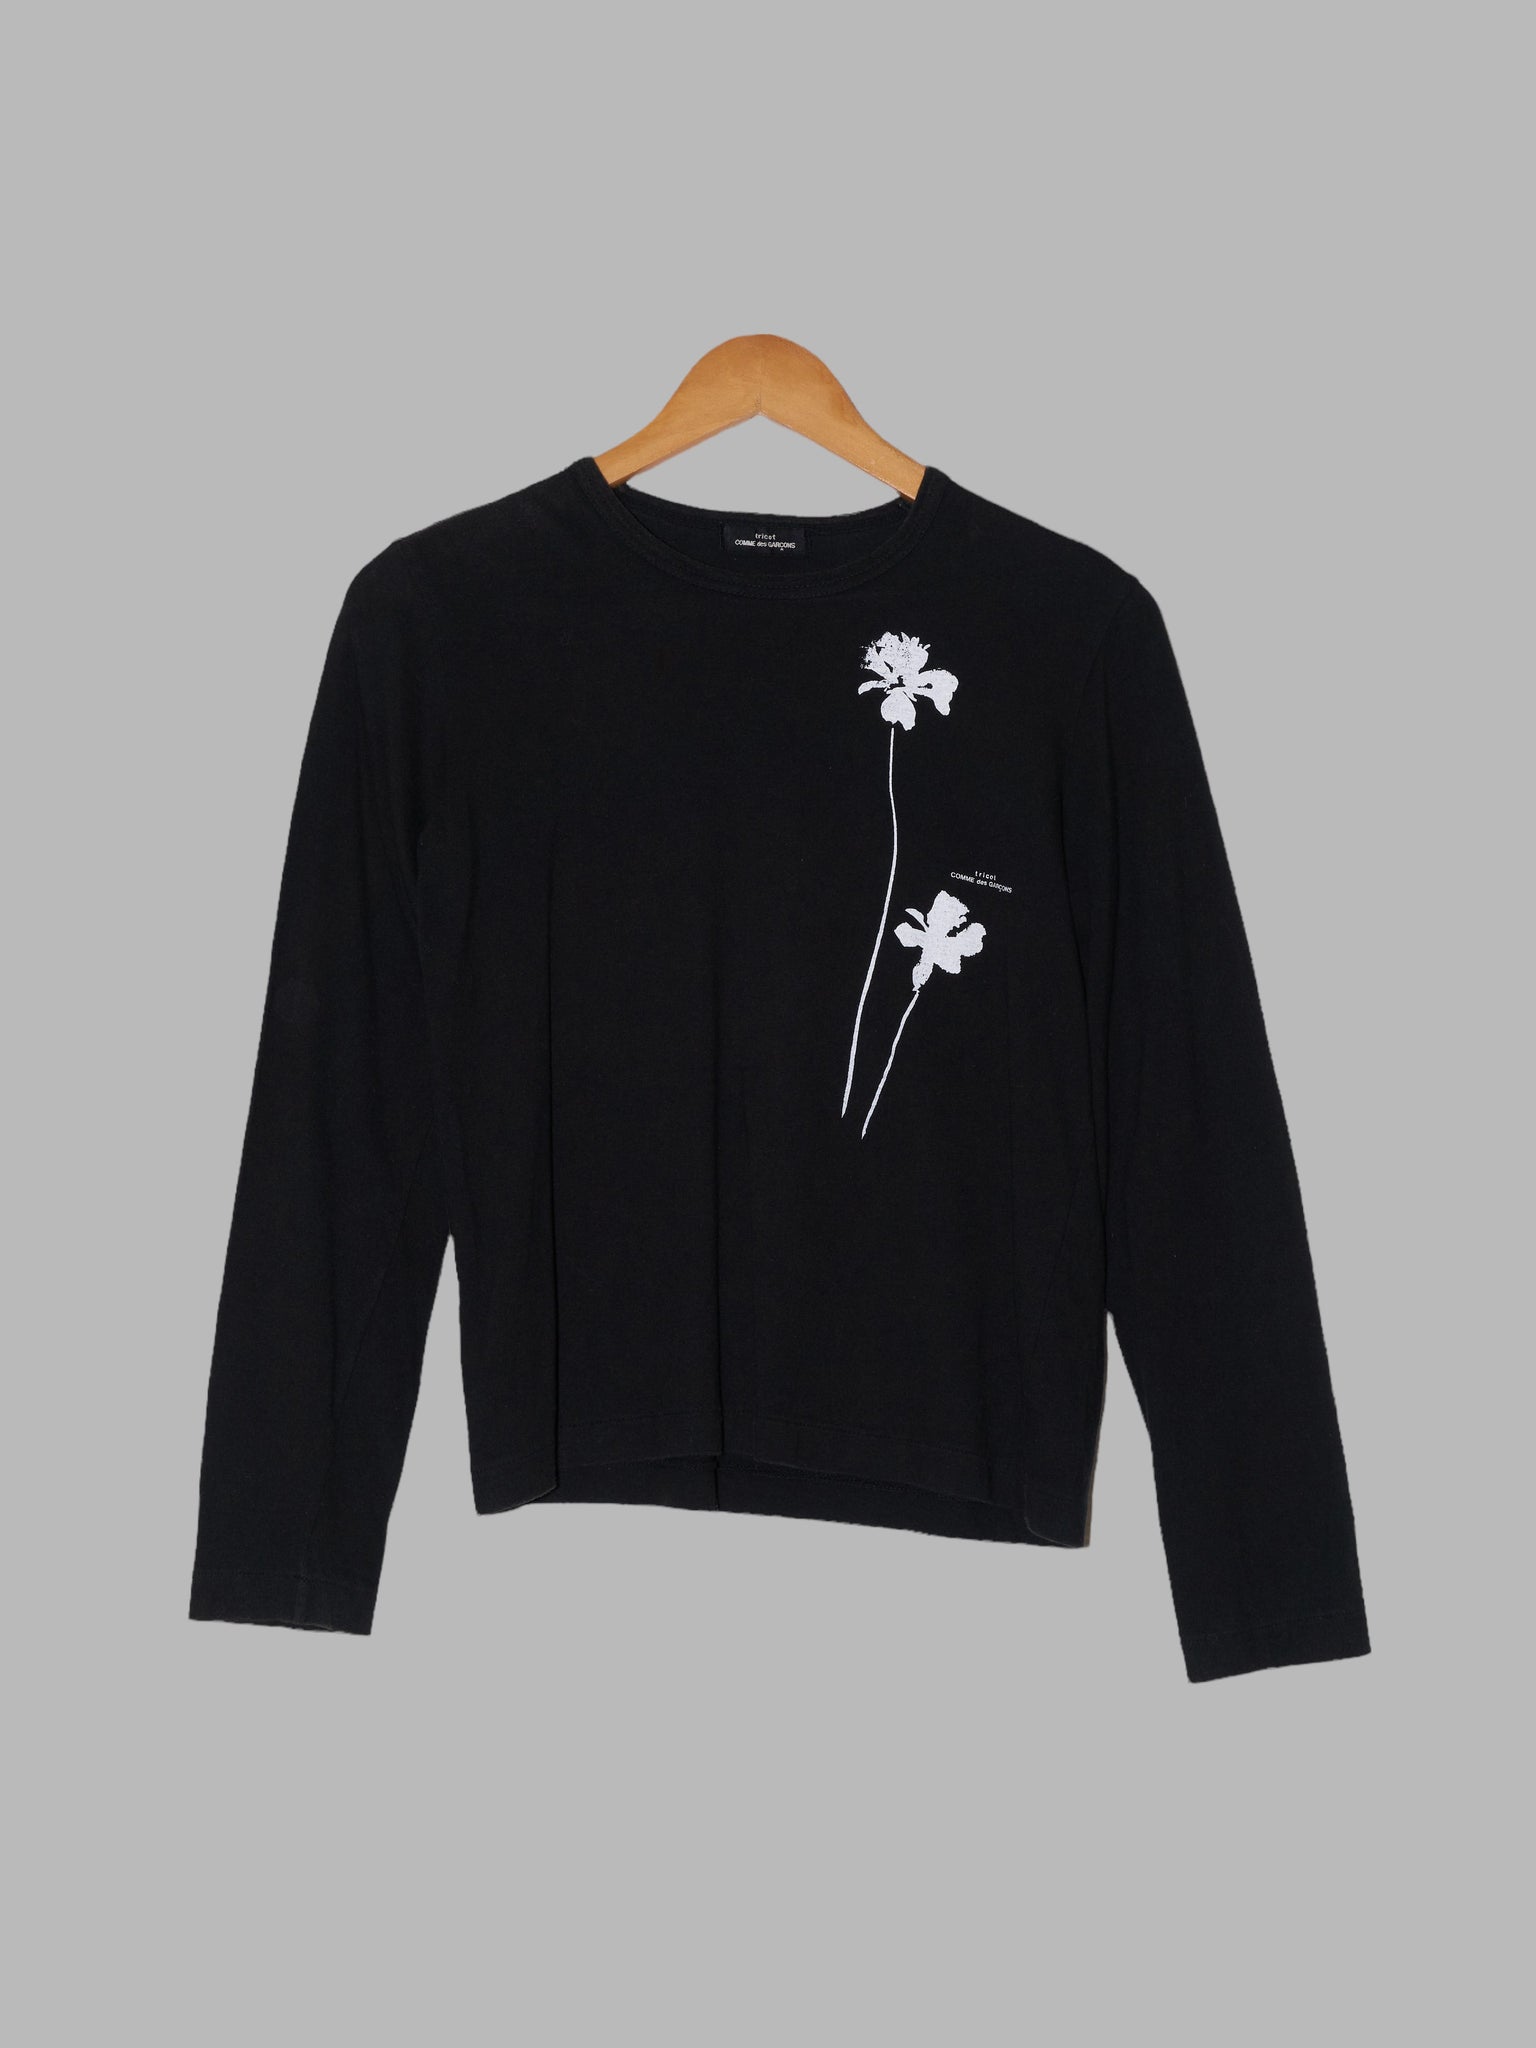 Comme des Garcons 1998 black cotton long sleeve t-shirt with flower logo print